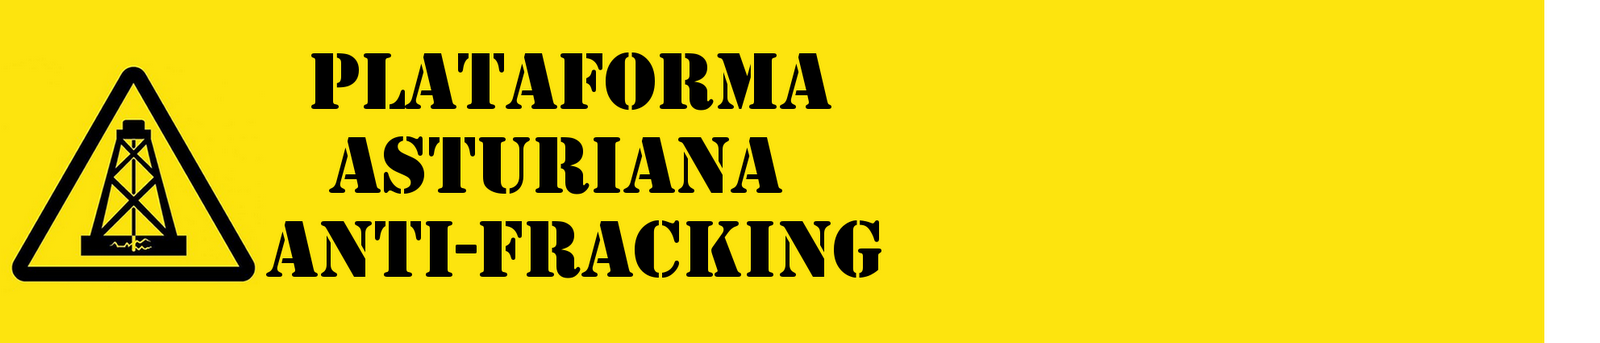 Plataforma Asturiana Anti-Fracking